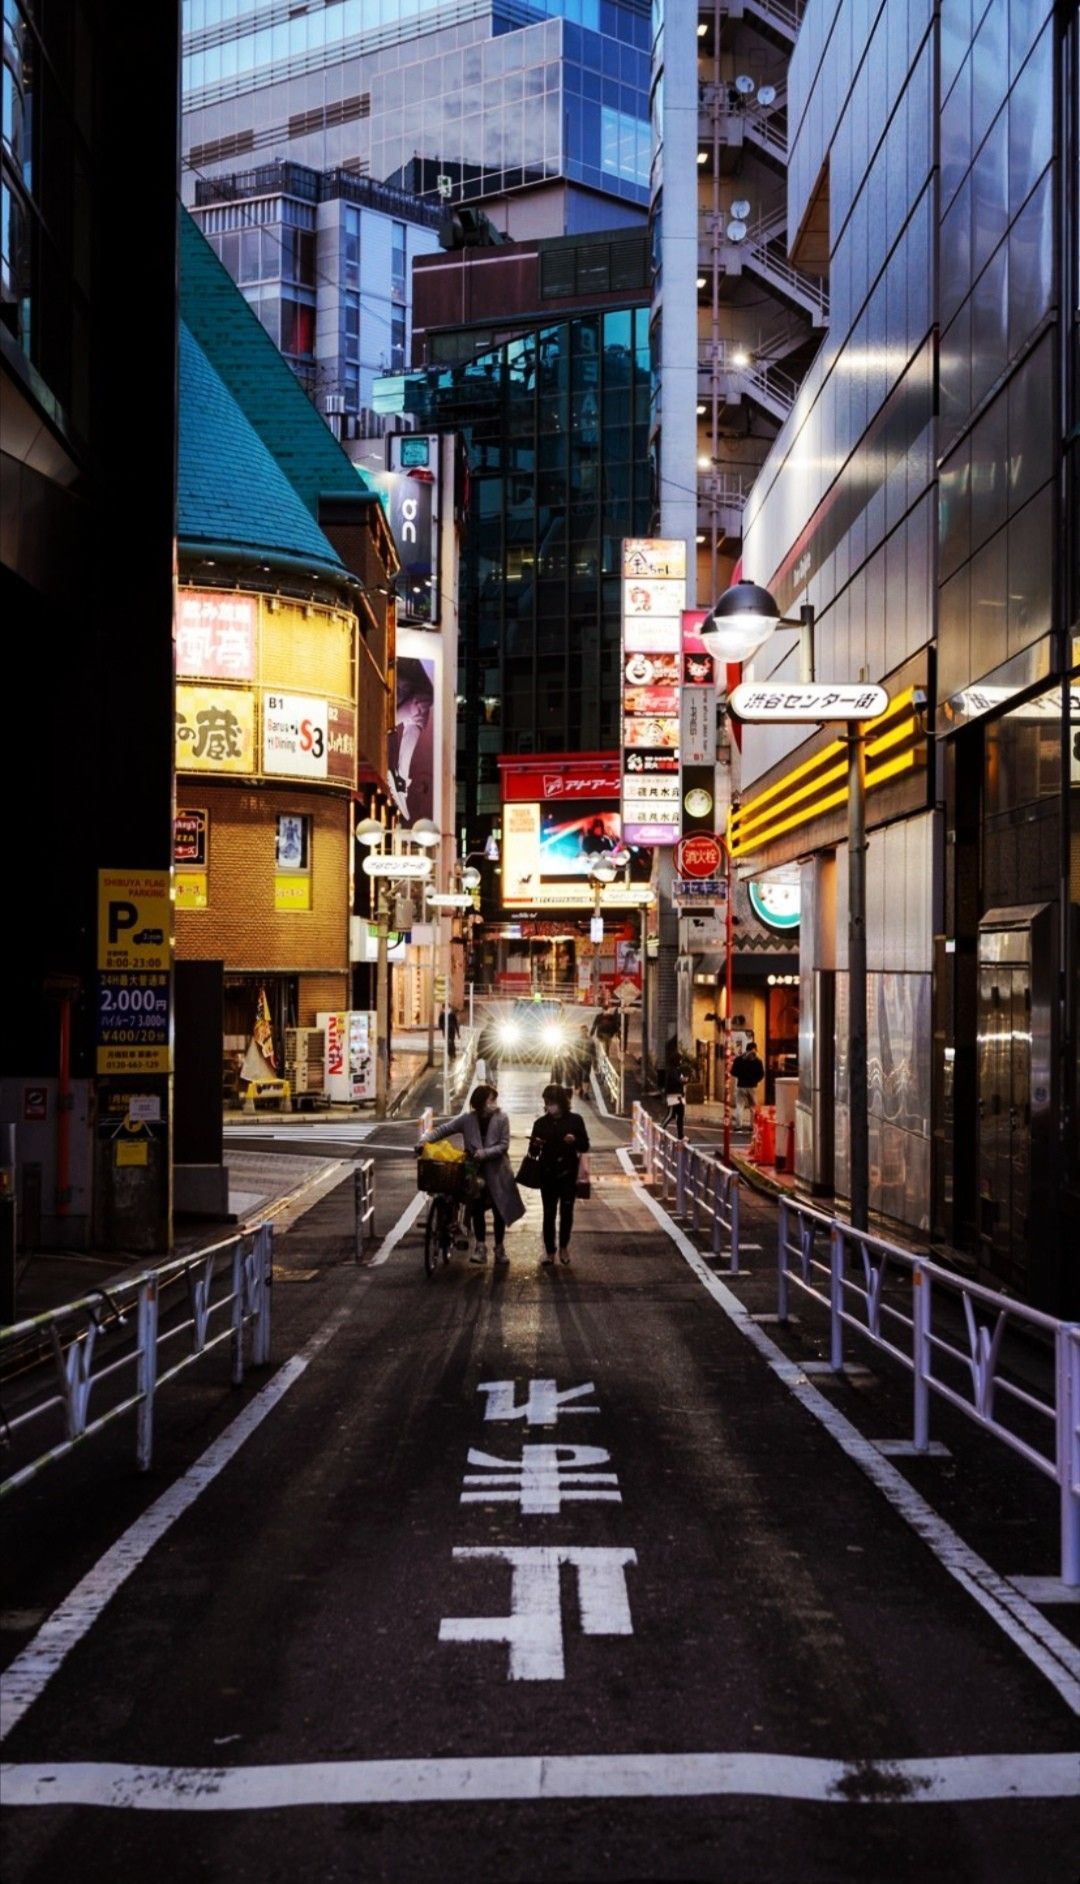 Travel. Street photography, Japan travel photography, Street scenes